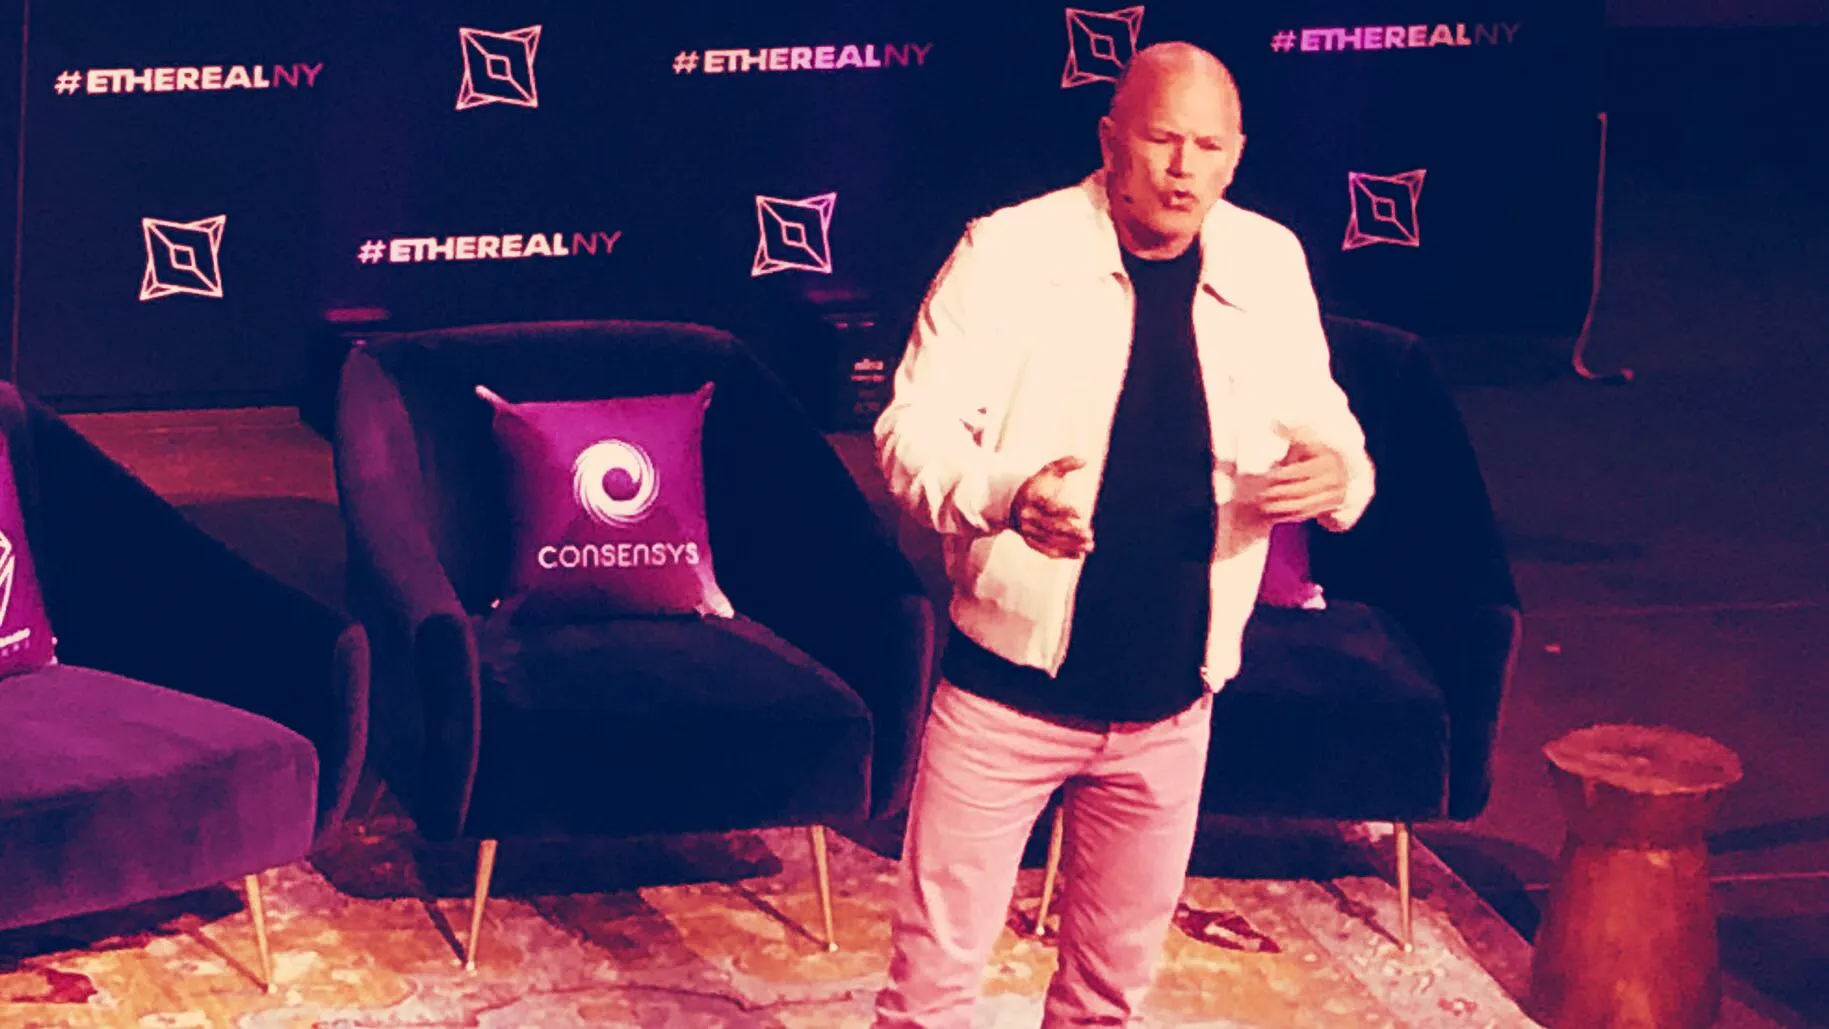 Galaxy Digital CEO Mike Novogratz speaking at Ethereal in 2019. Image: Decrypt.